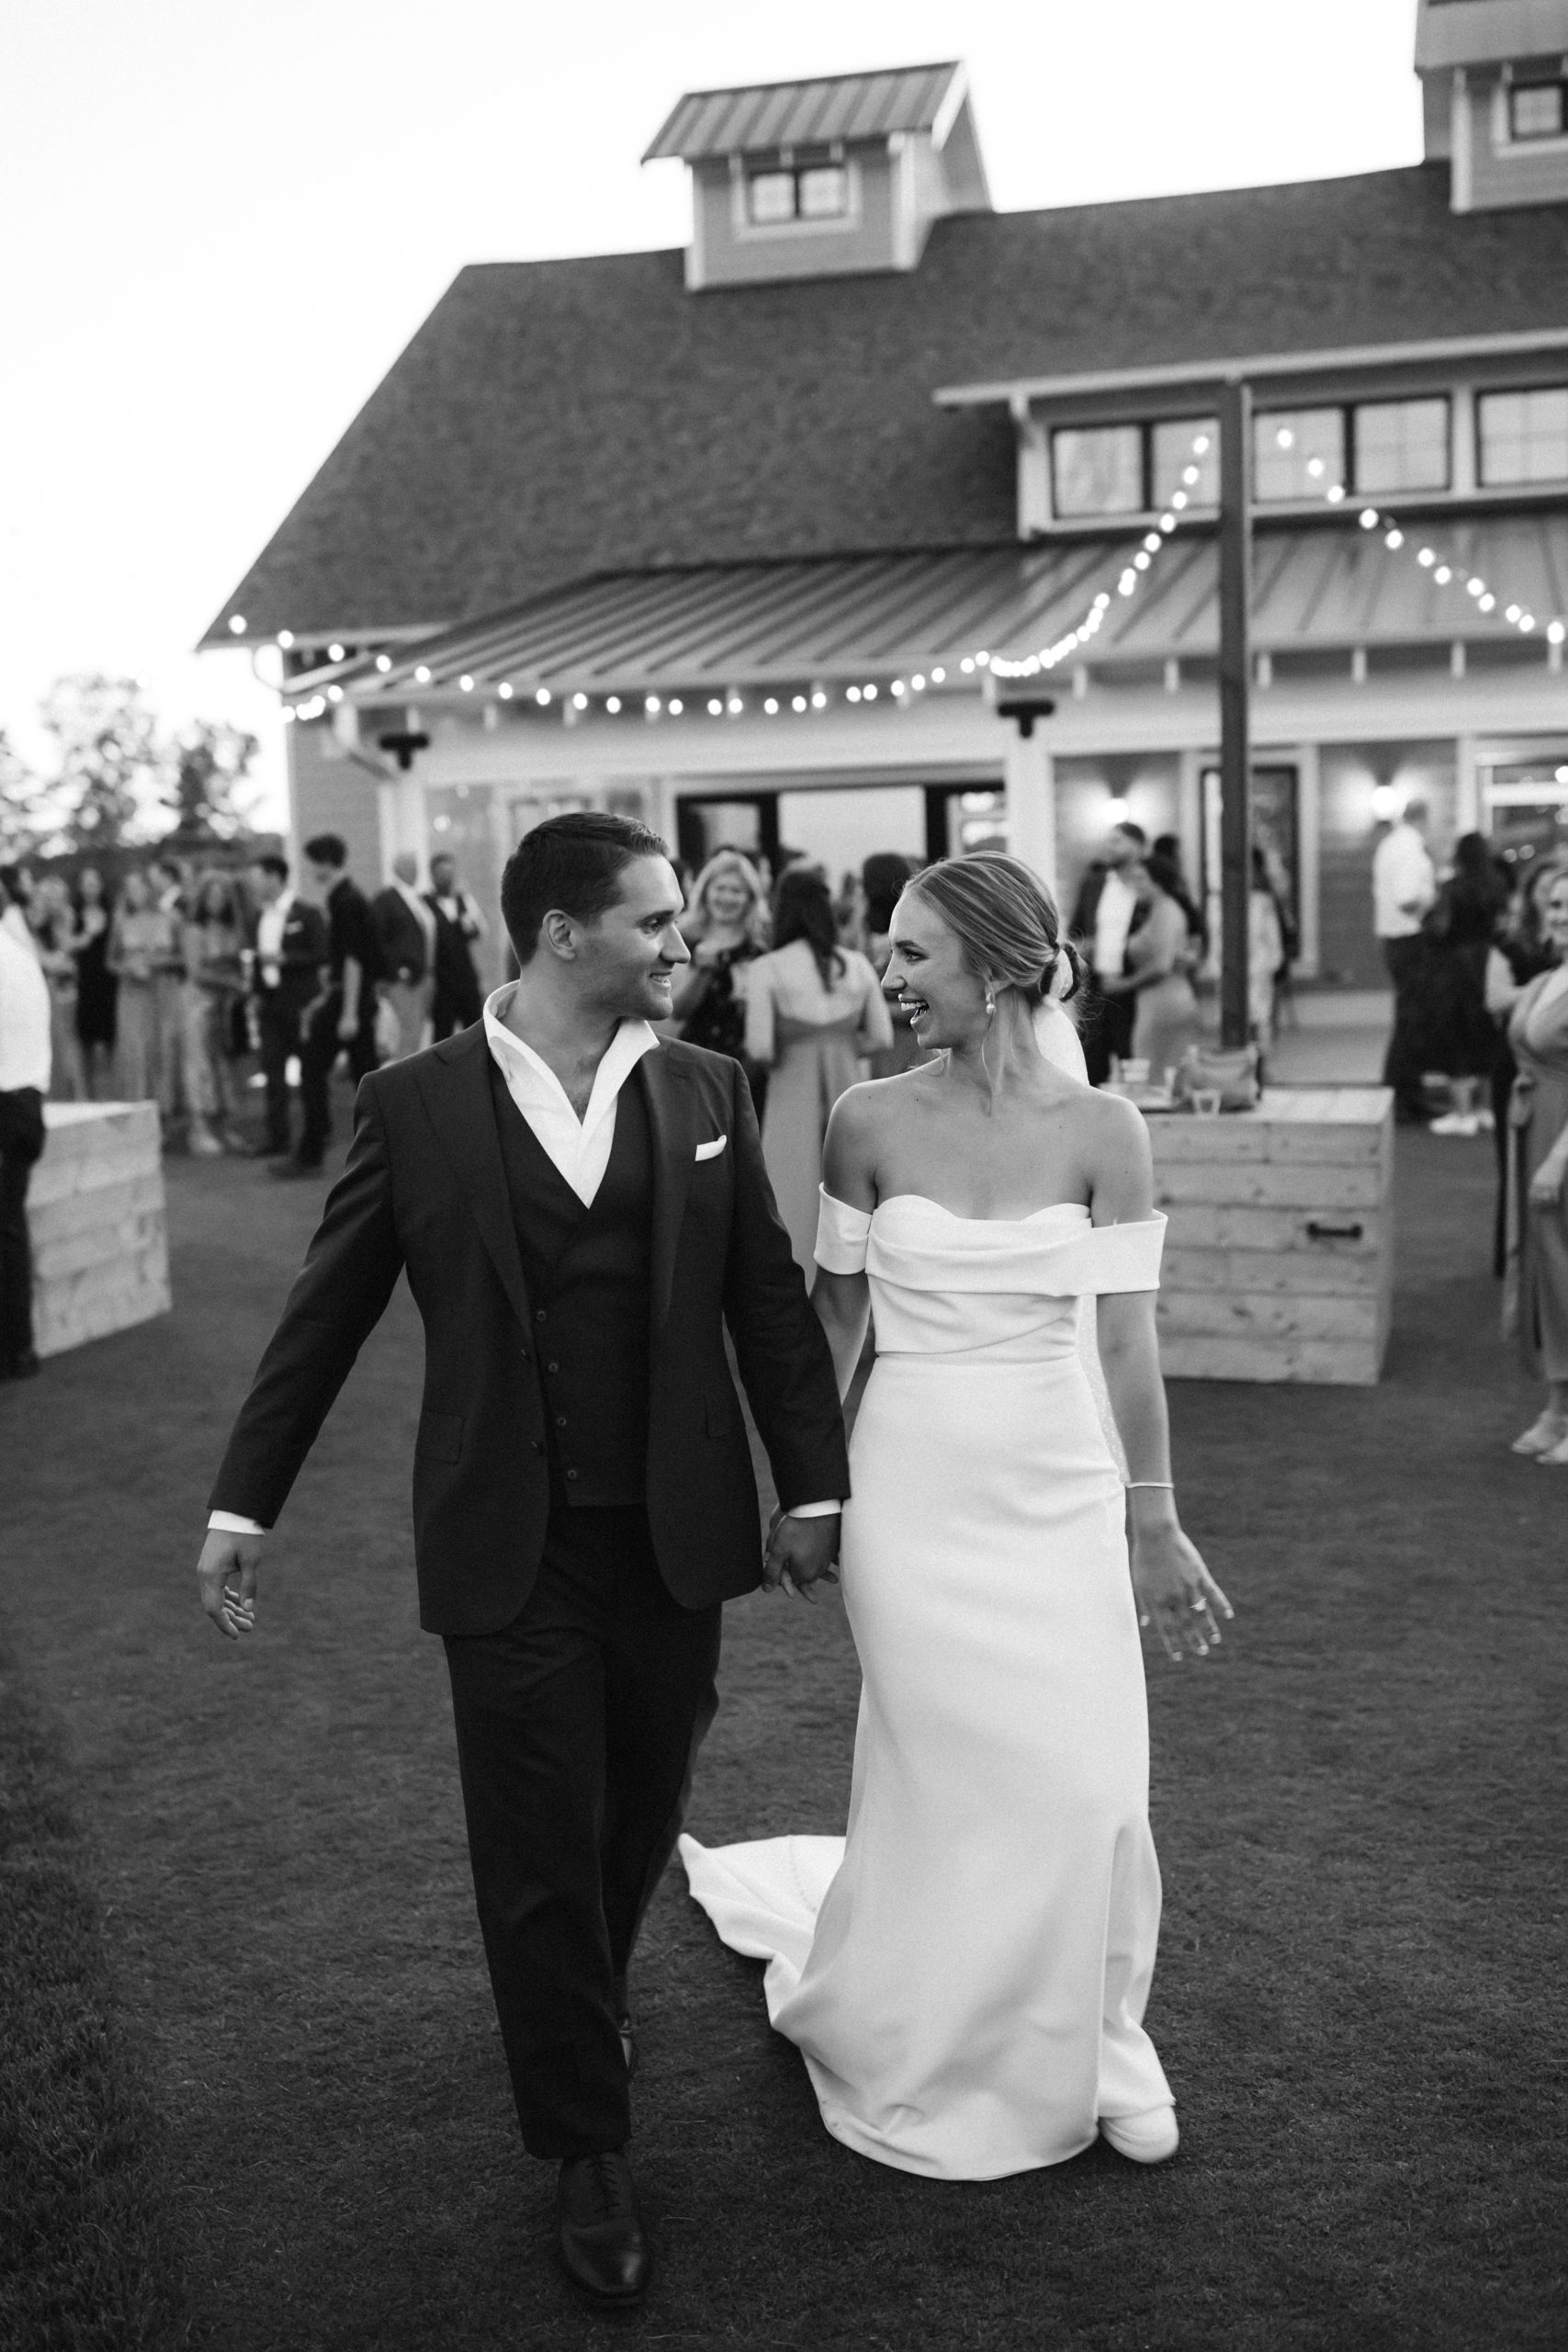 Lindsay & Joey's Tuscan, Olive-Inspired Wedding